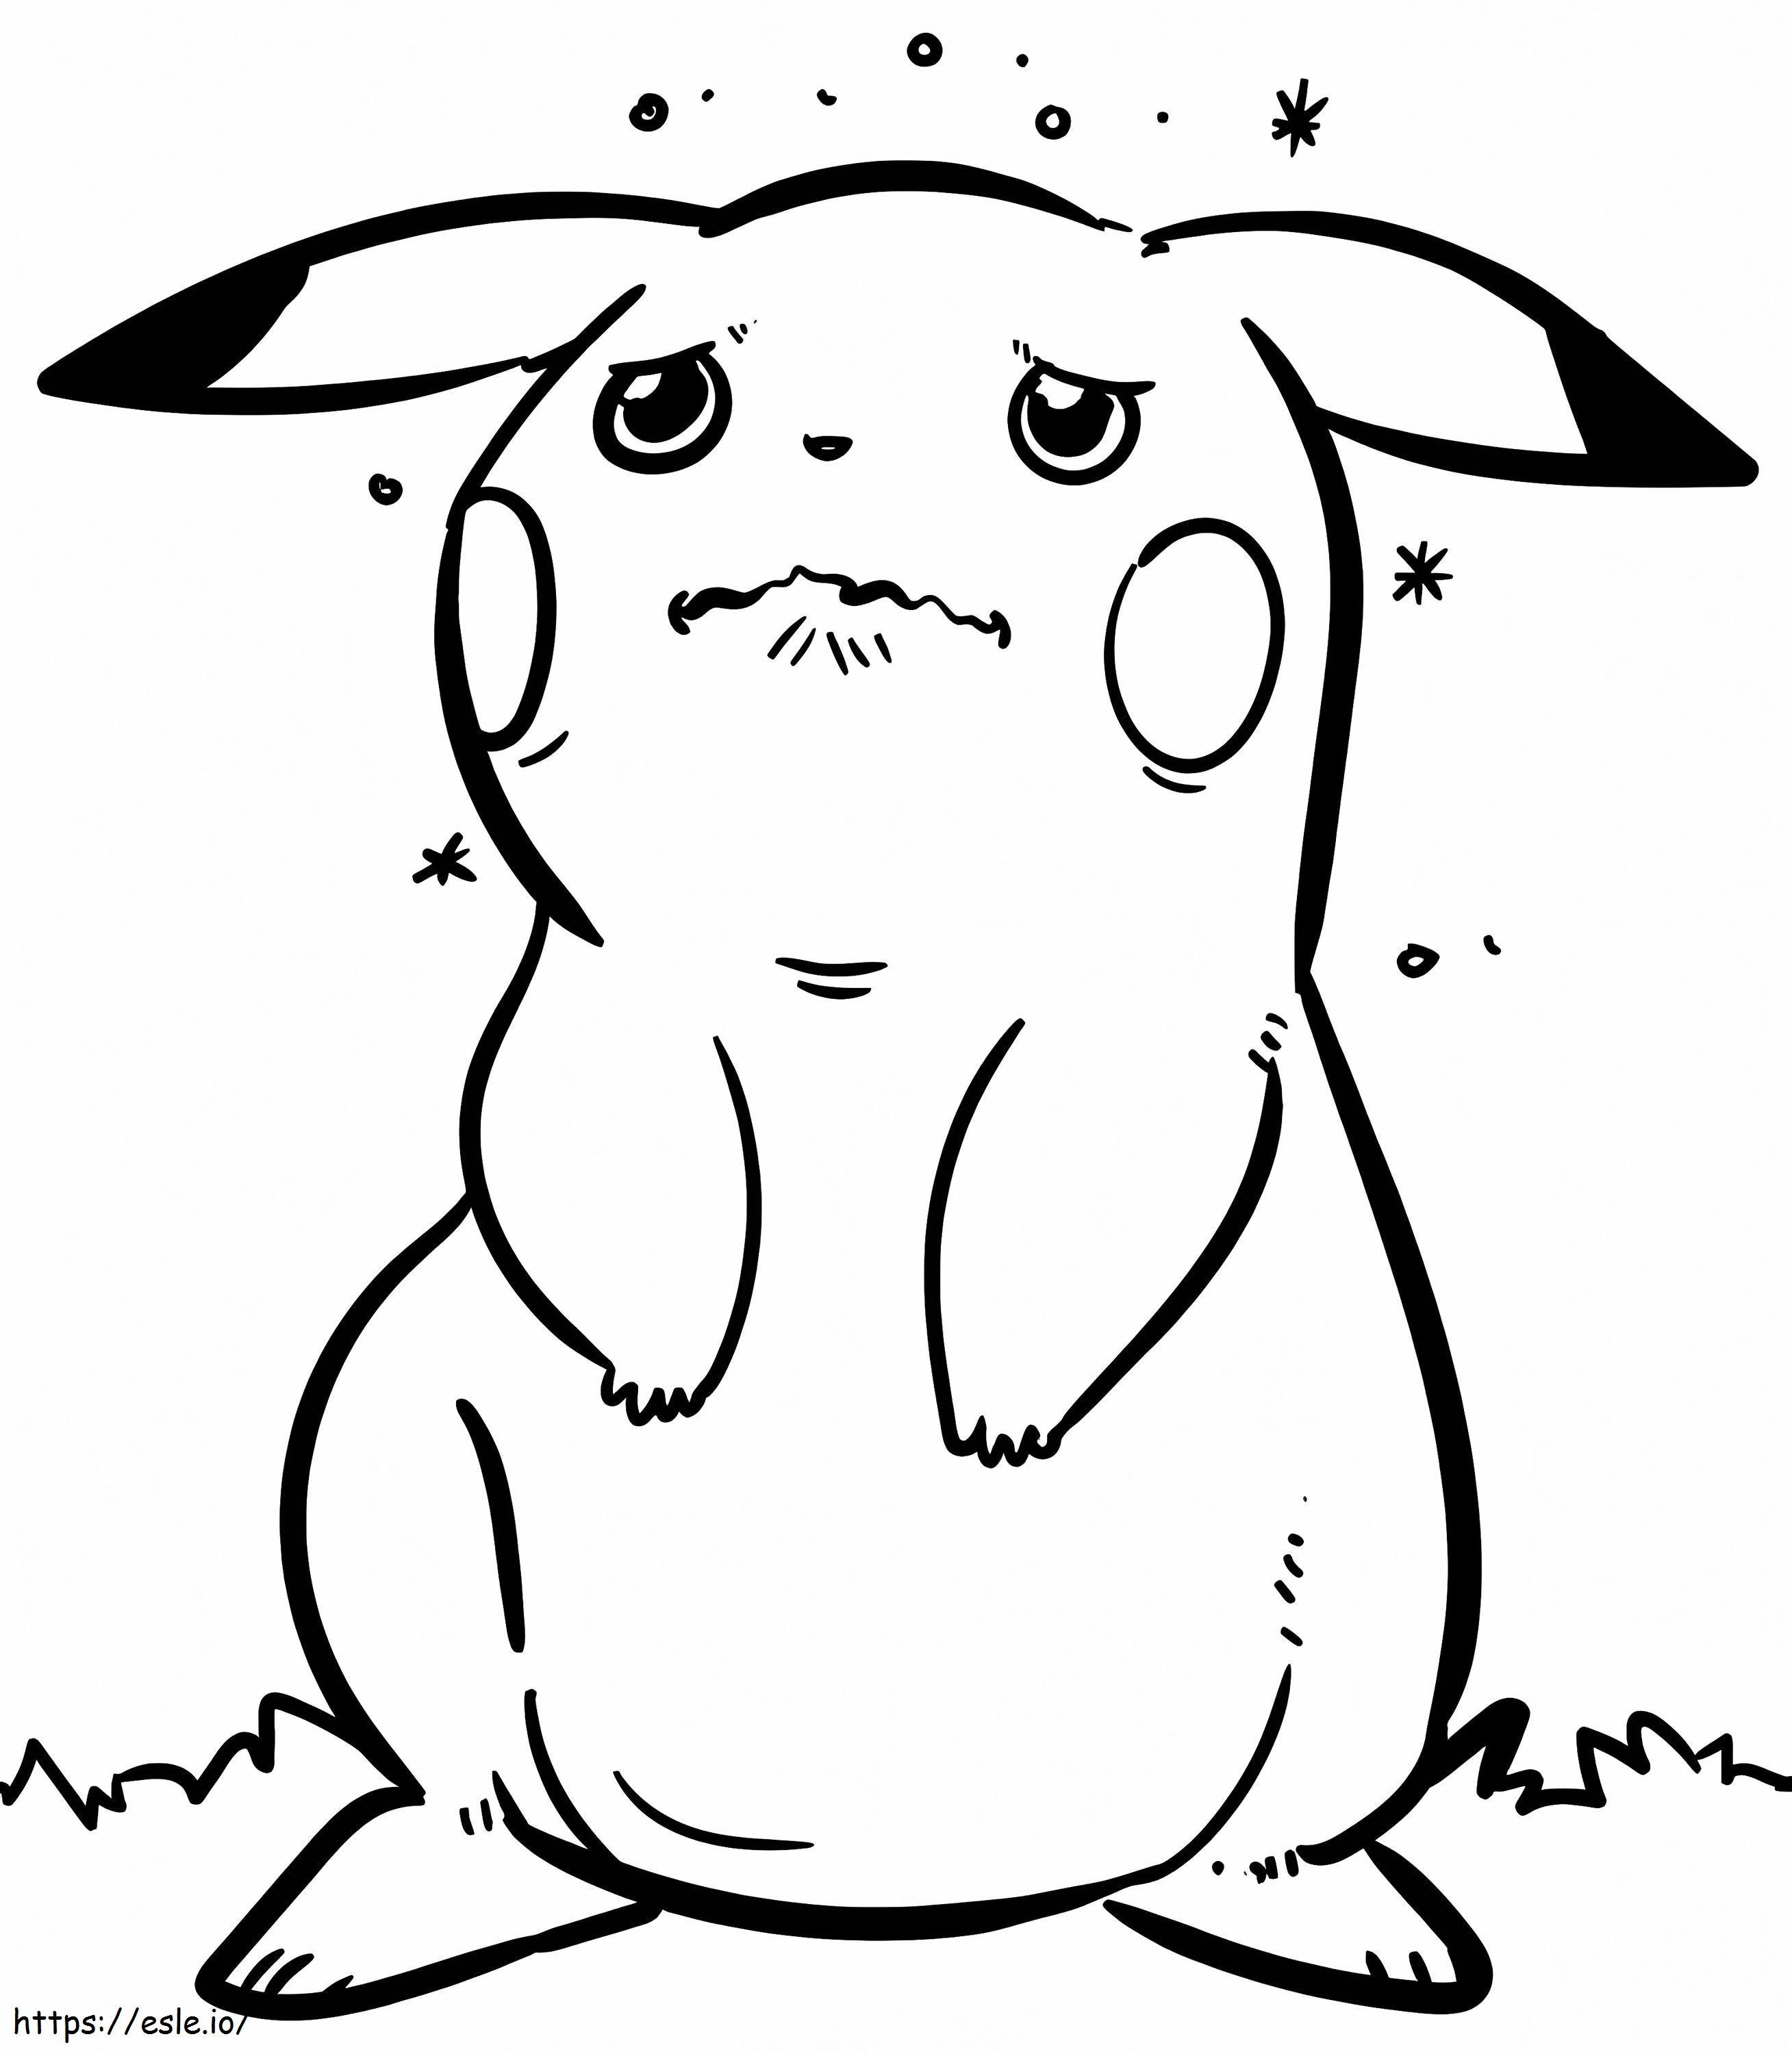 Coloriage Pikachu triste à imprimer dessin